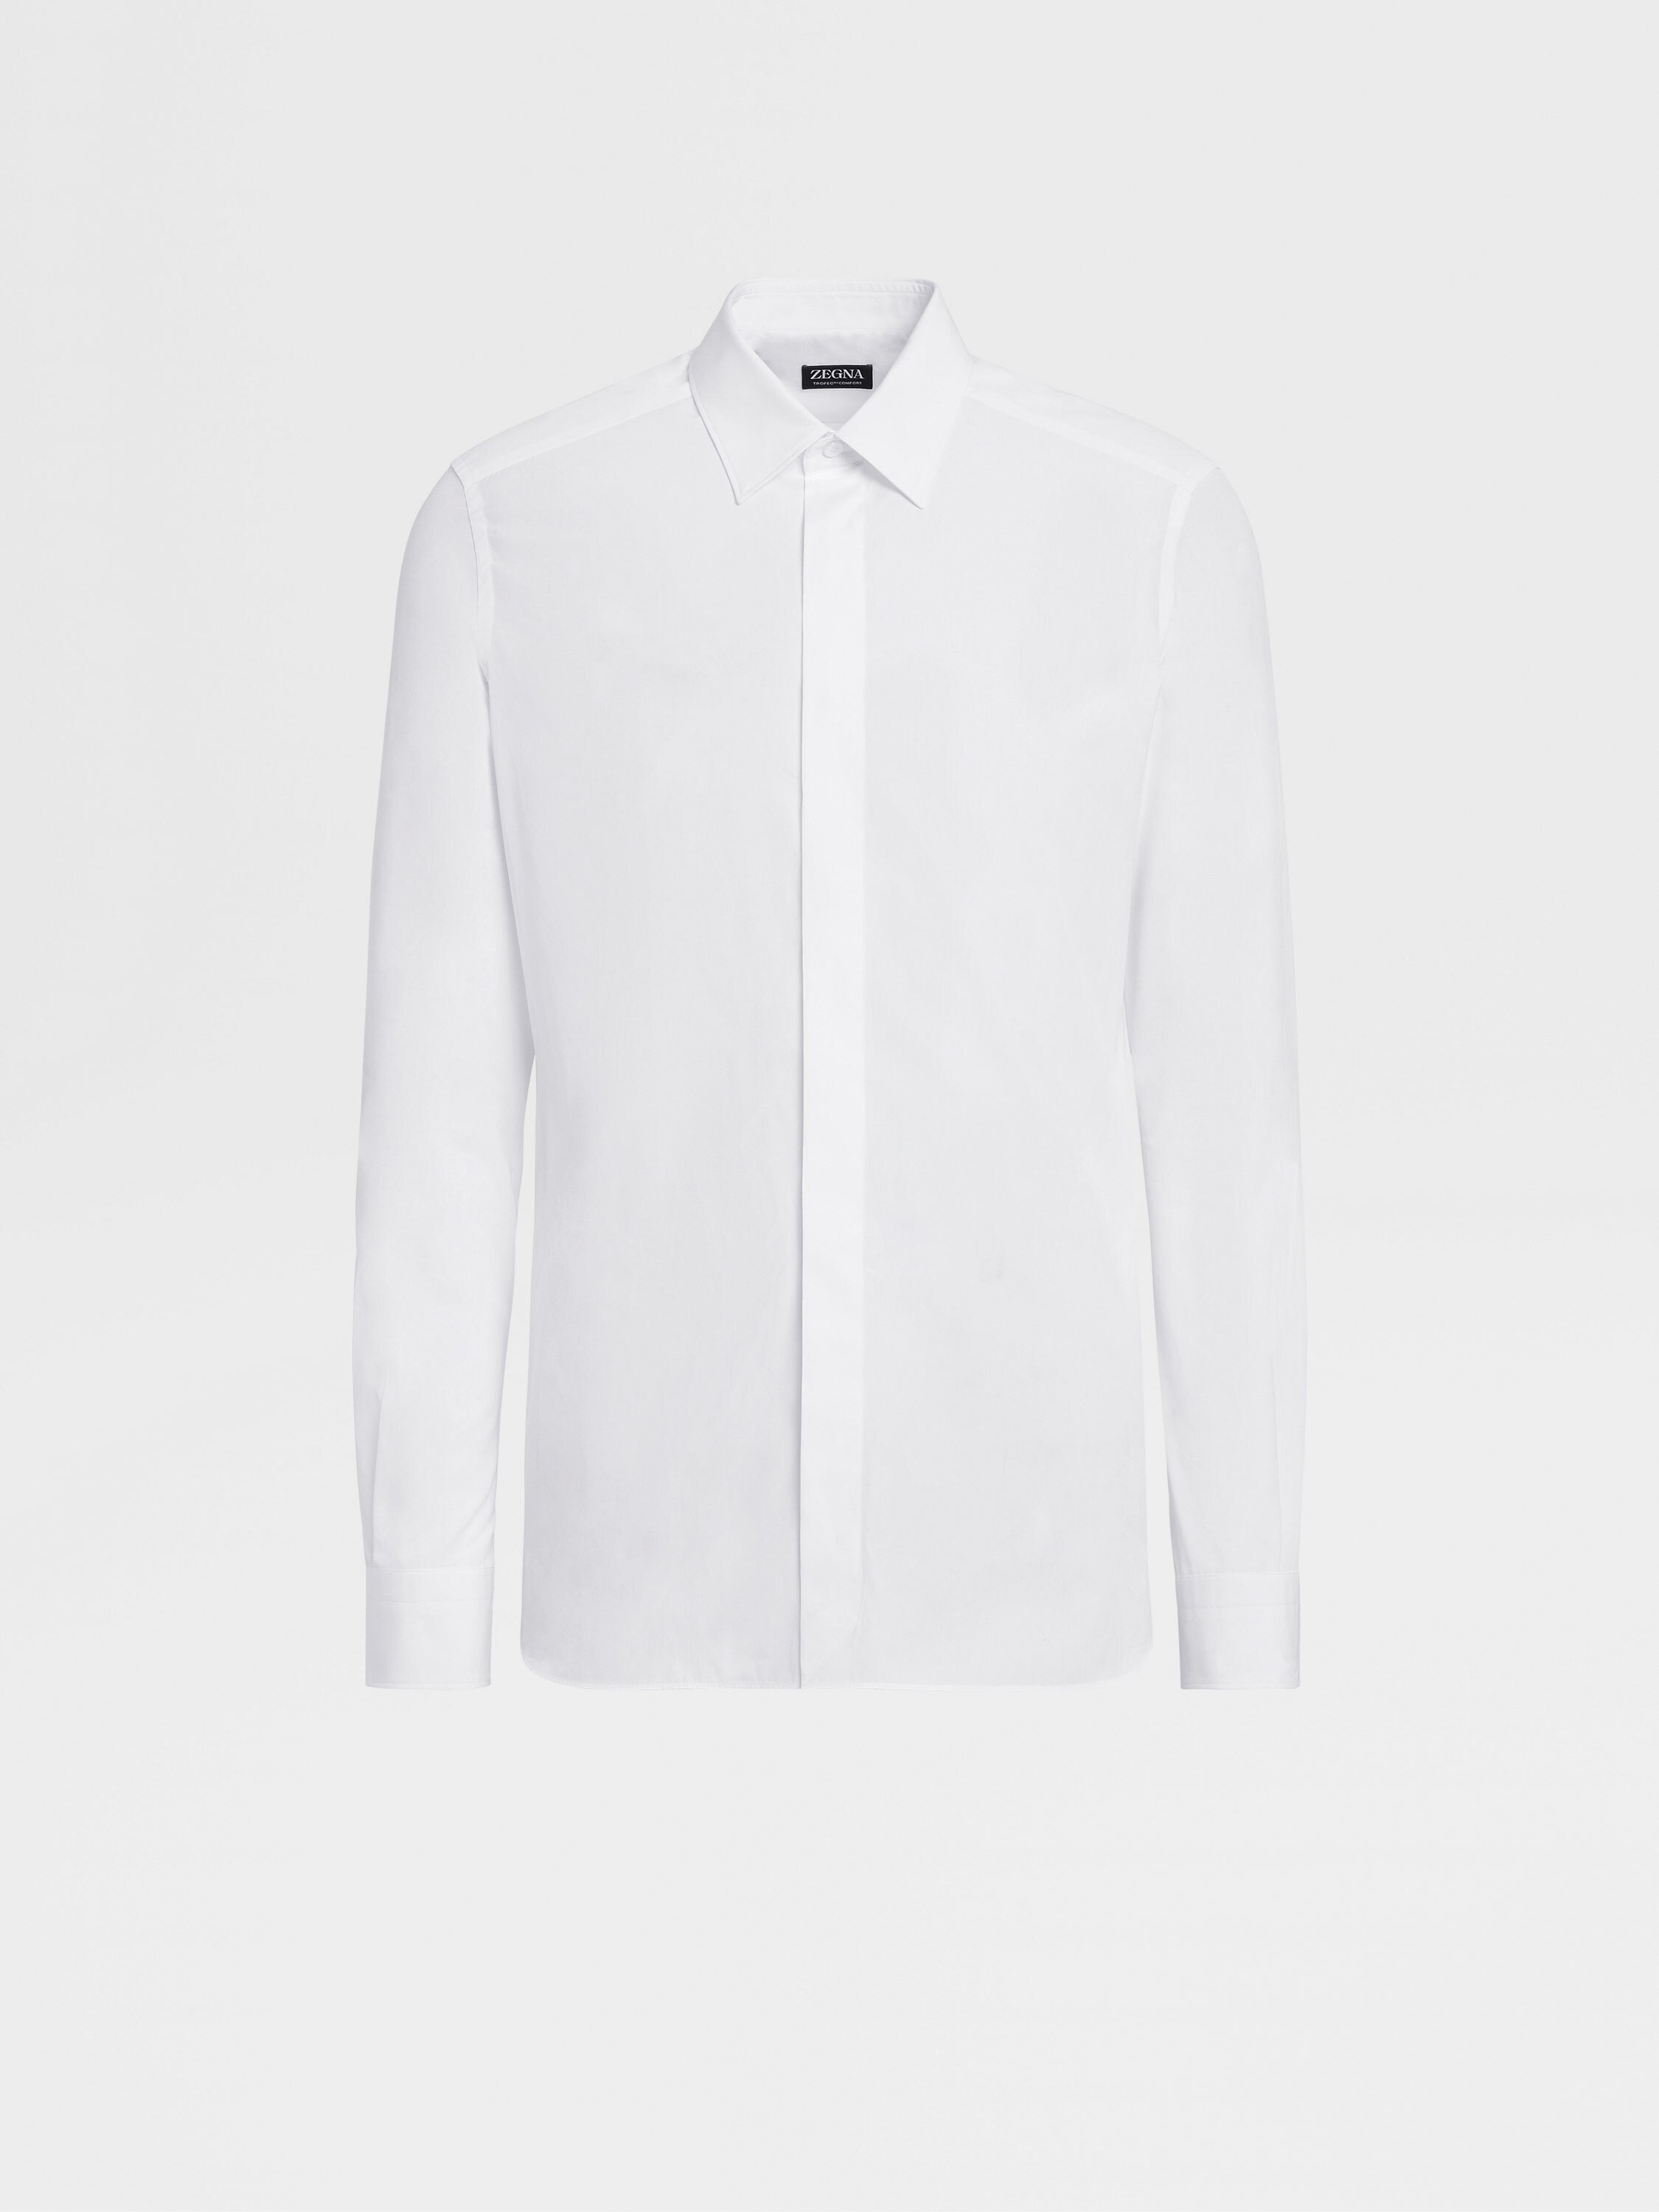 White Trofeo™ Comfort Cotton Long-sleeve Tailoring Shirt